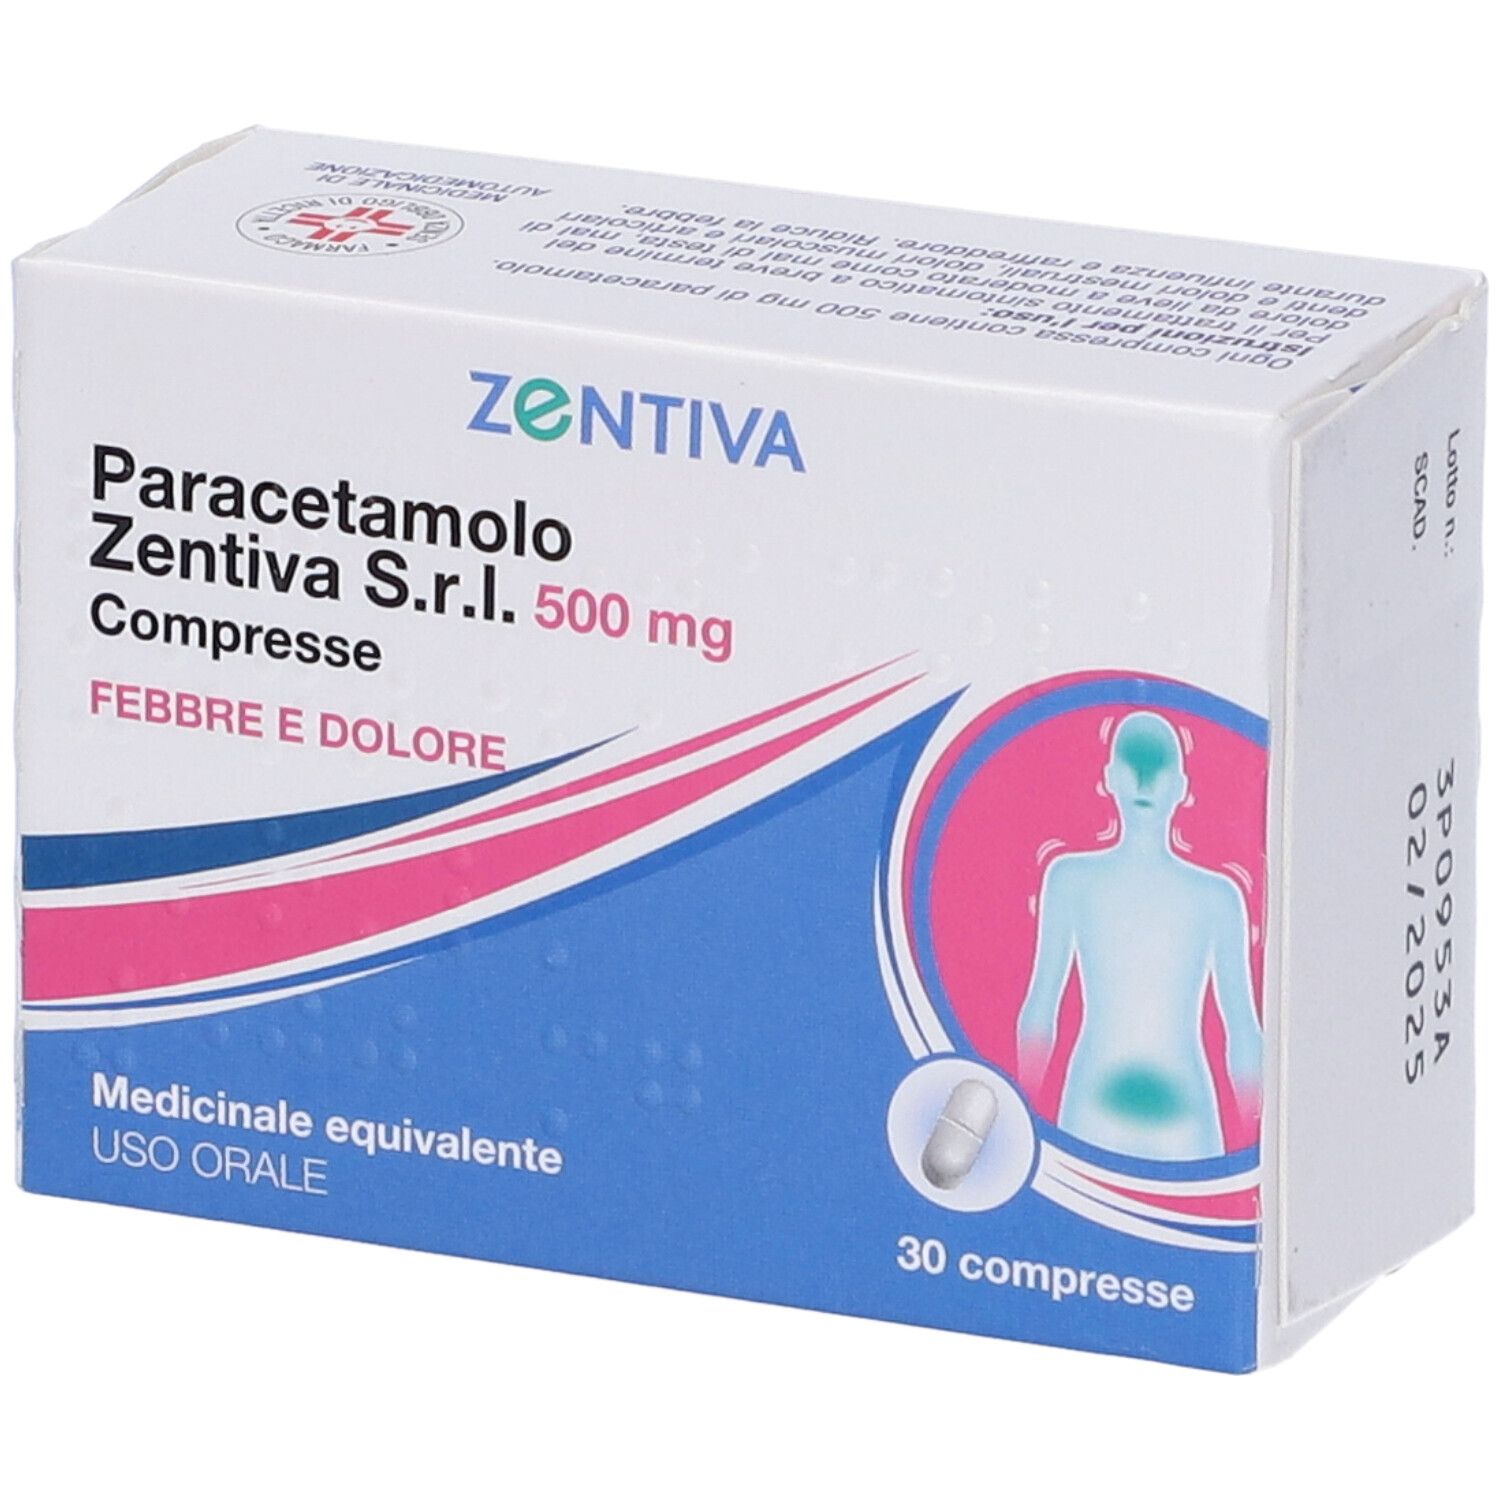 Image of Paracetamolo Zentiva 500mg 30 Compresse